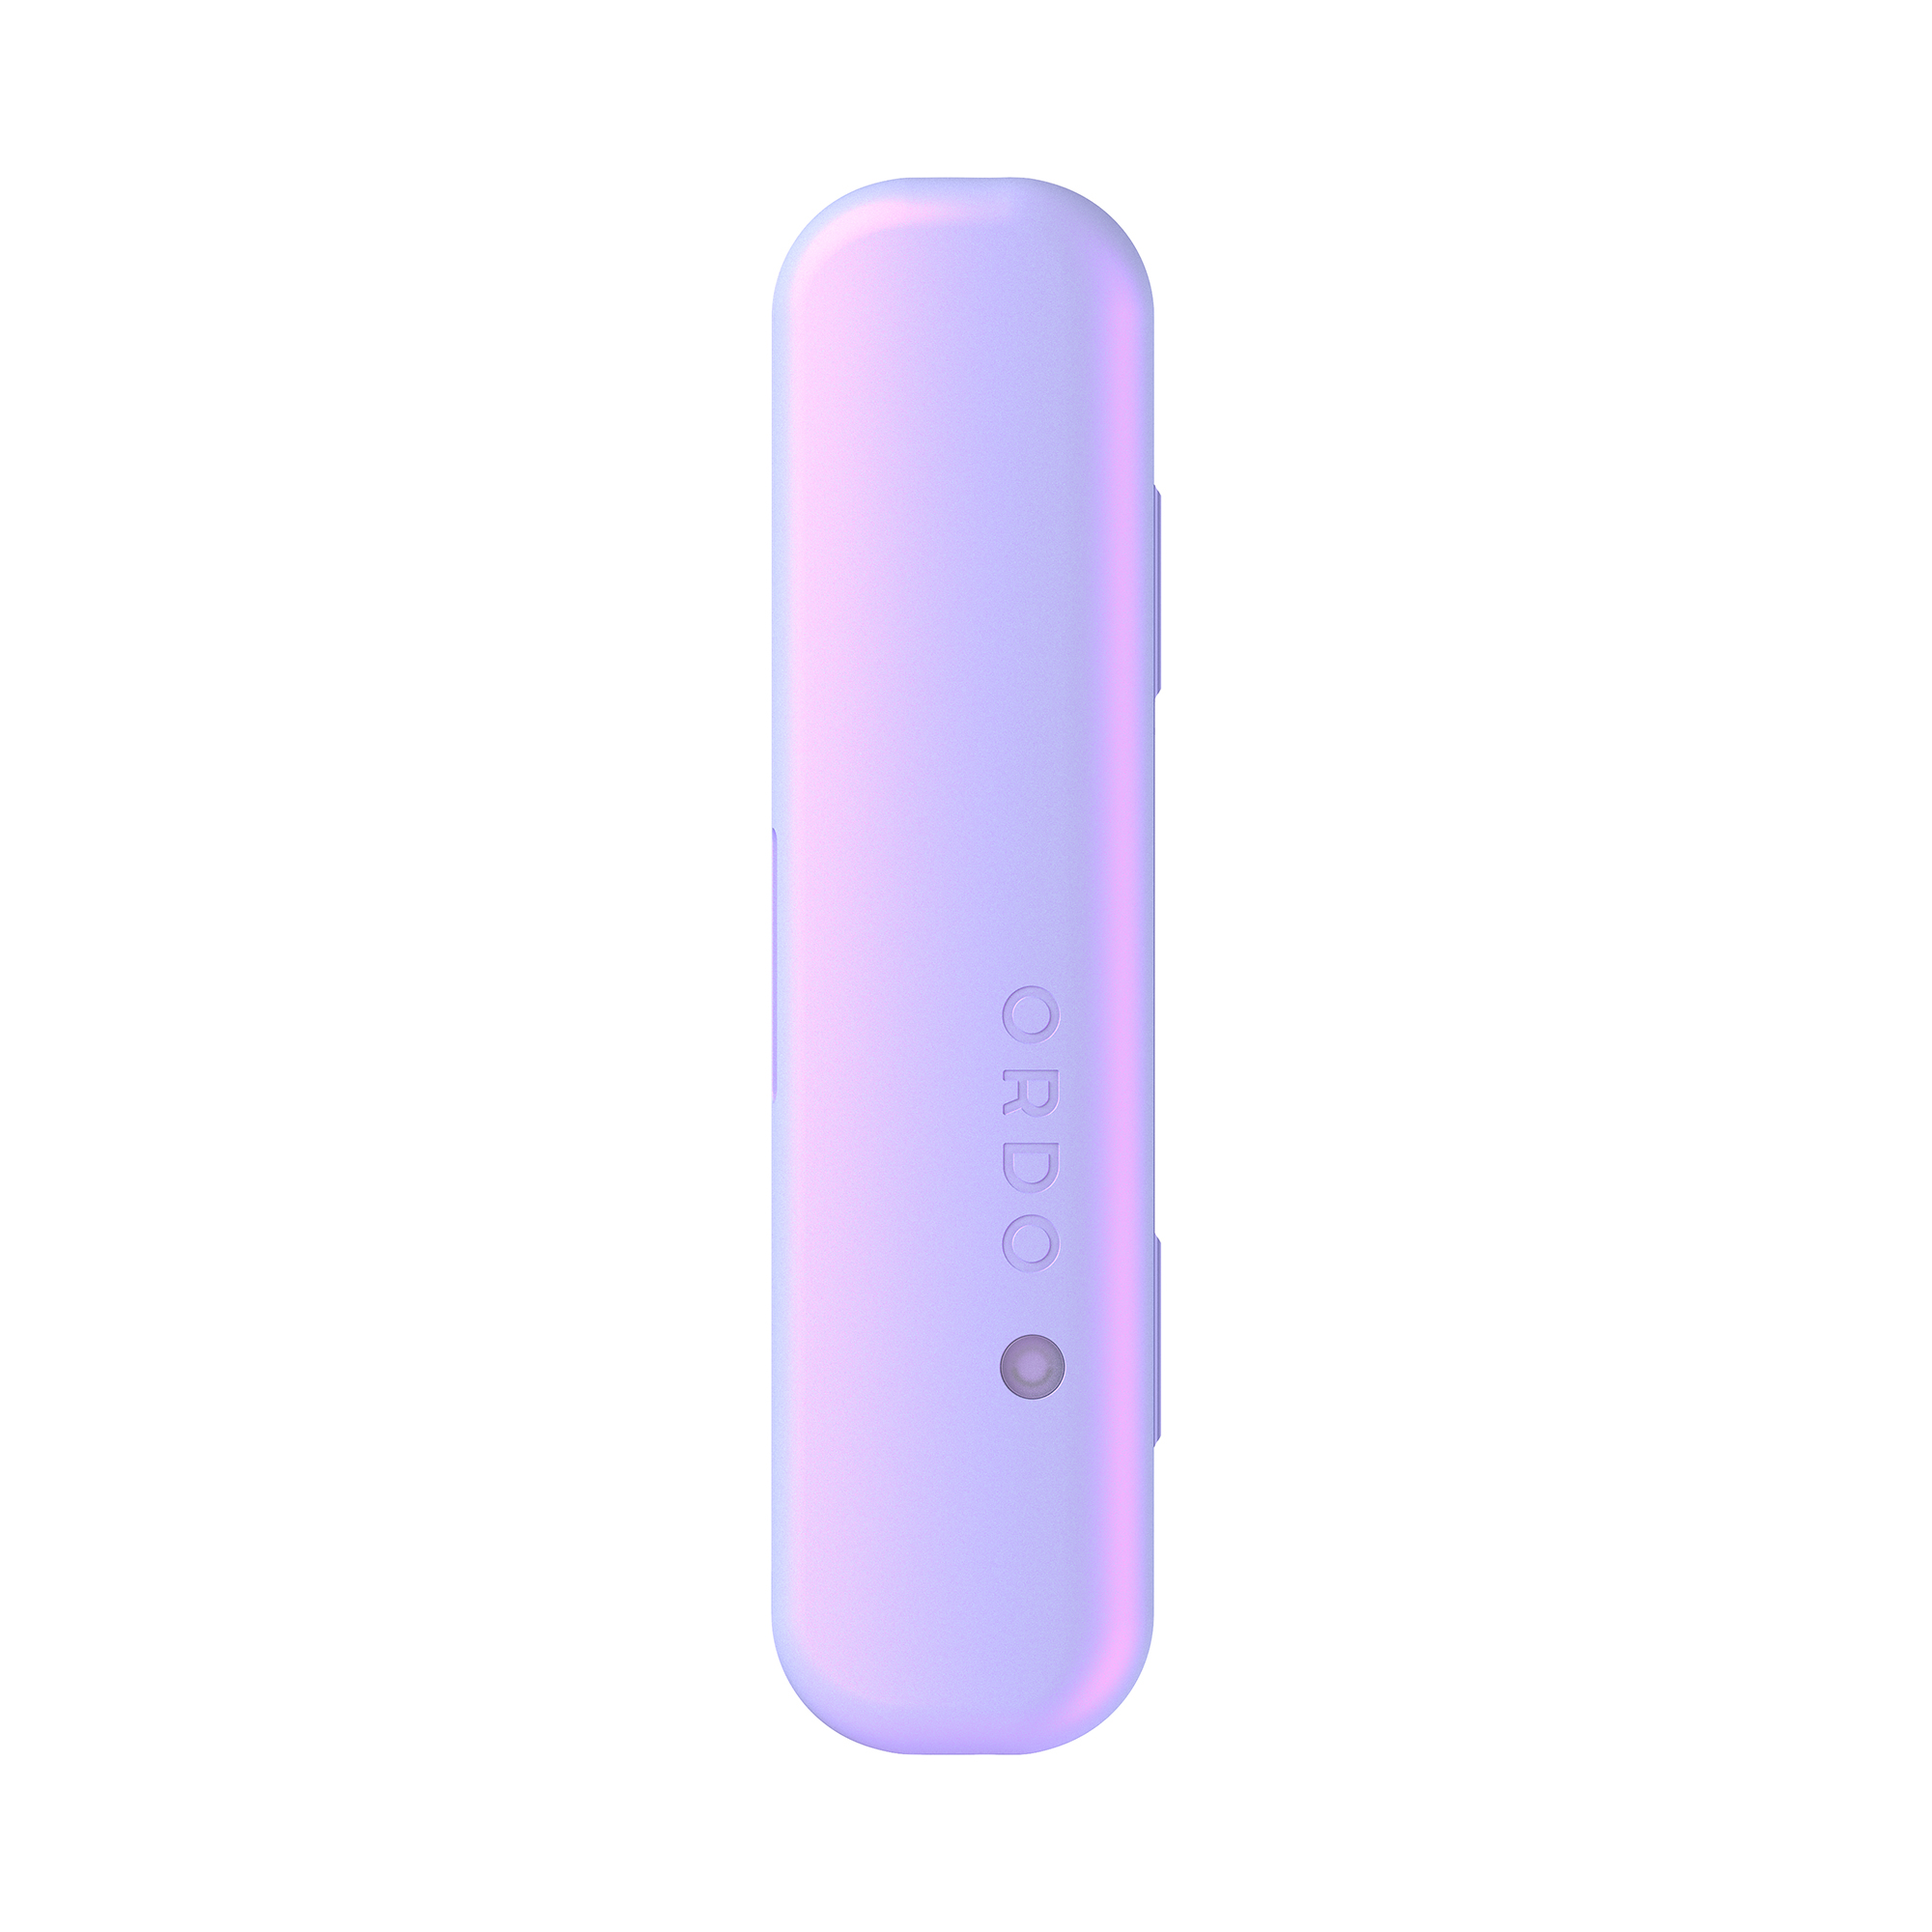 Зарядное устройство, футляр ORDO Sonic+ Charging Travel Case Pearl Violet зарядный кейс dji charging case для pocket 2 cp os 00000129 01